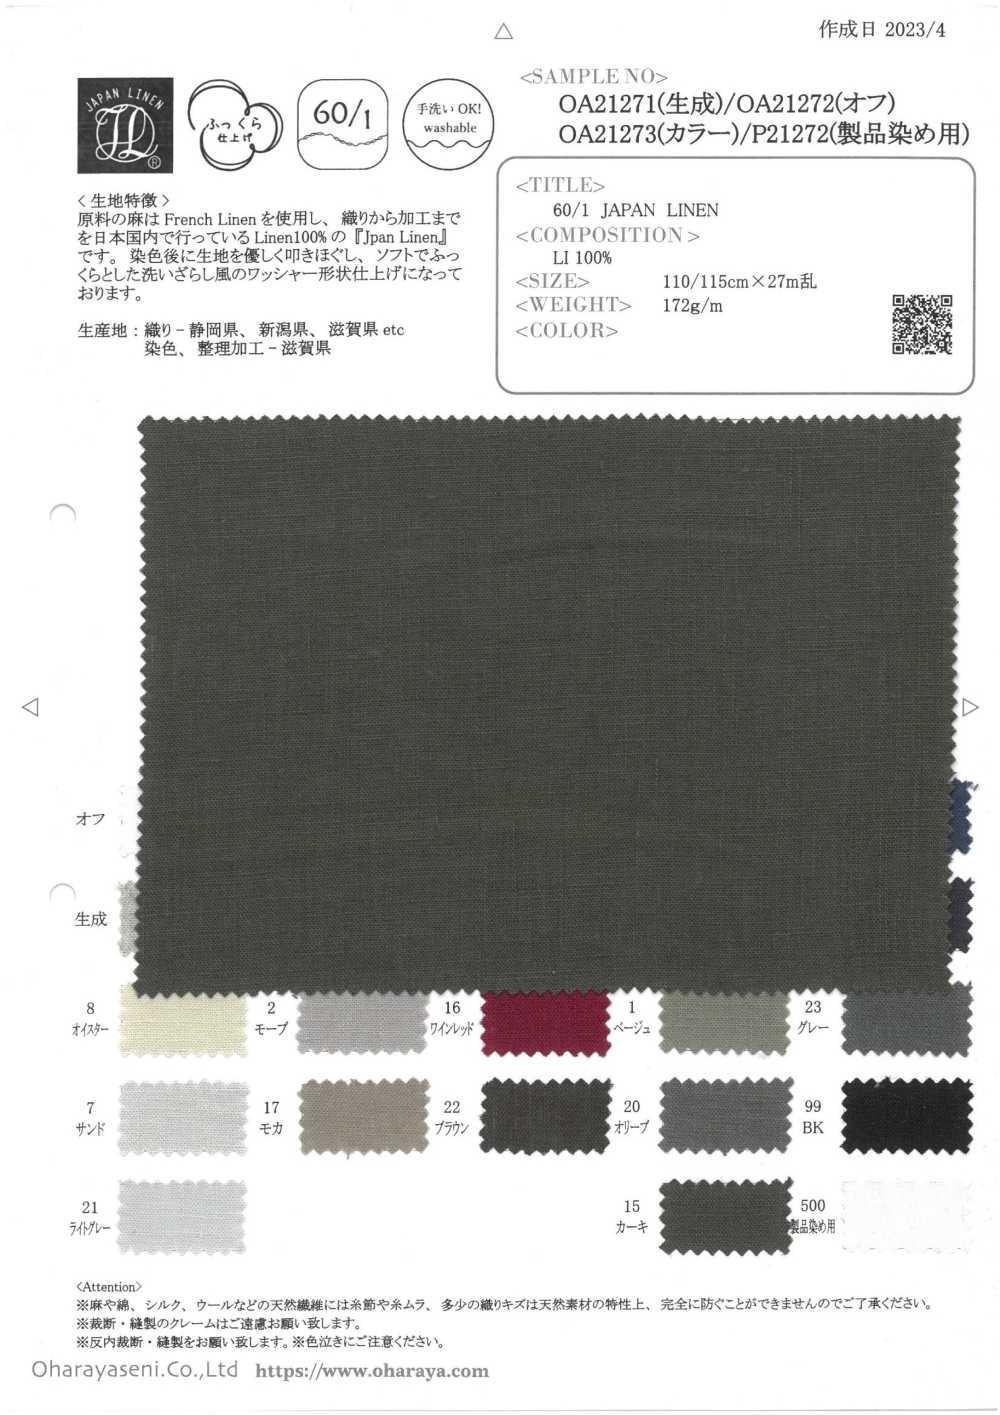 OA21272 60/1・LINO JAPÓN (Blanco Roto)[Fabrica Textil] Oharayaseni